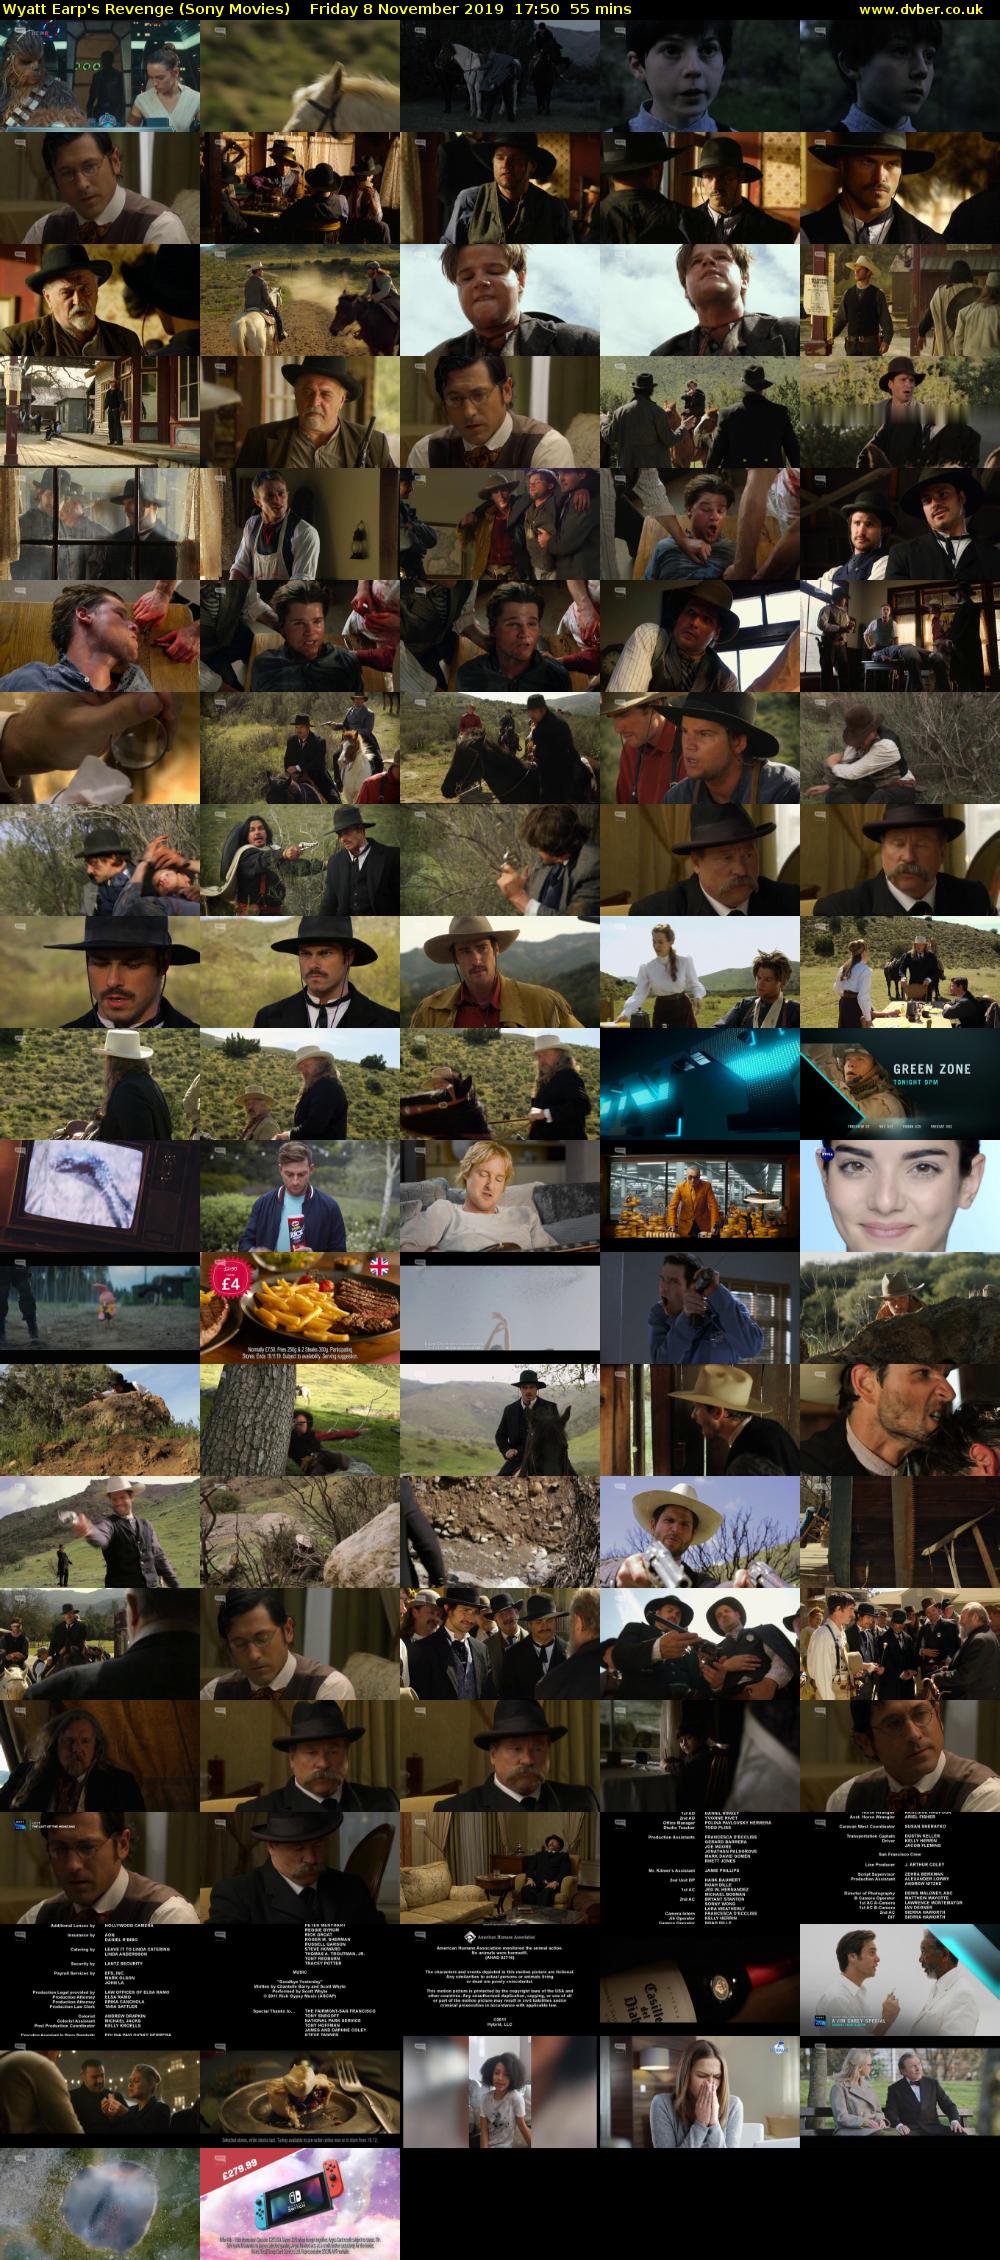 Wyatt Earp's Revenge (Sony Movies) Friday 8 November 2019 17:50 - 18:45